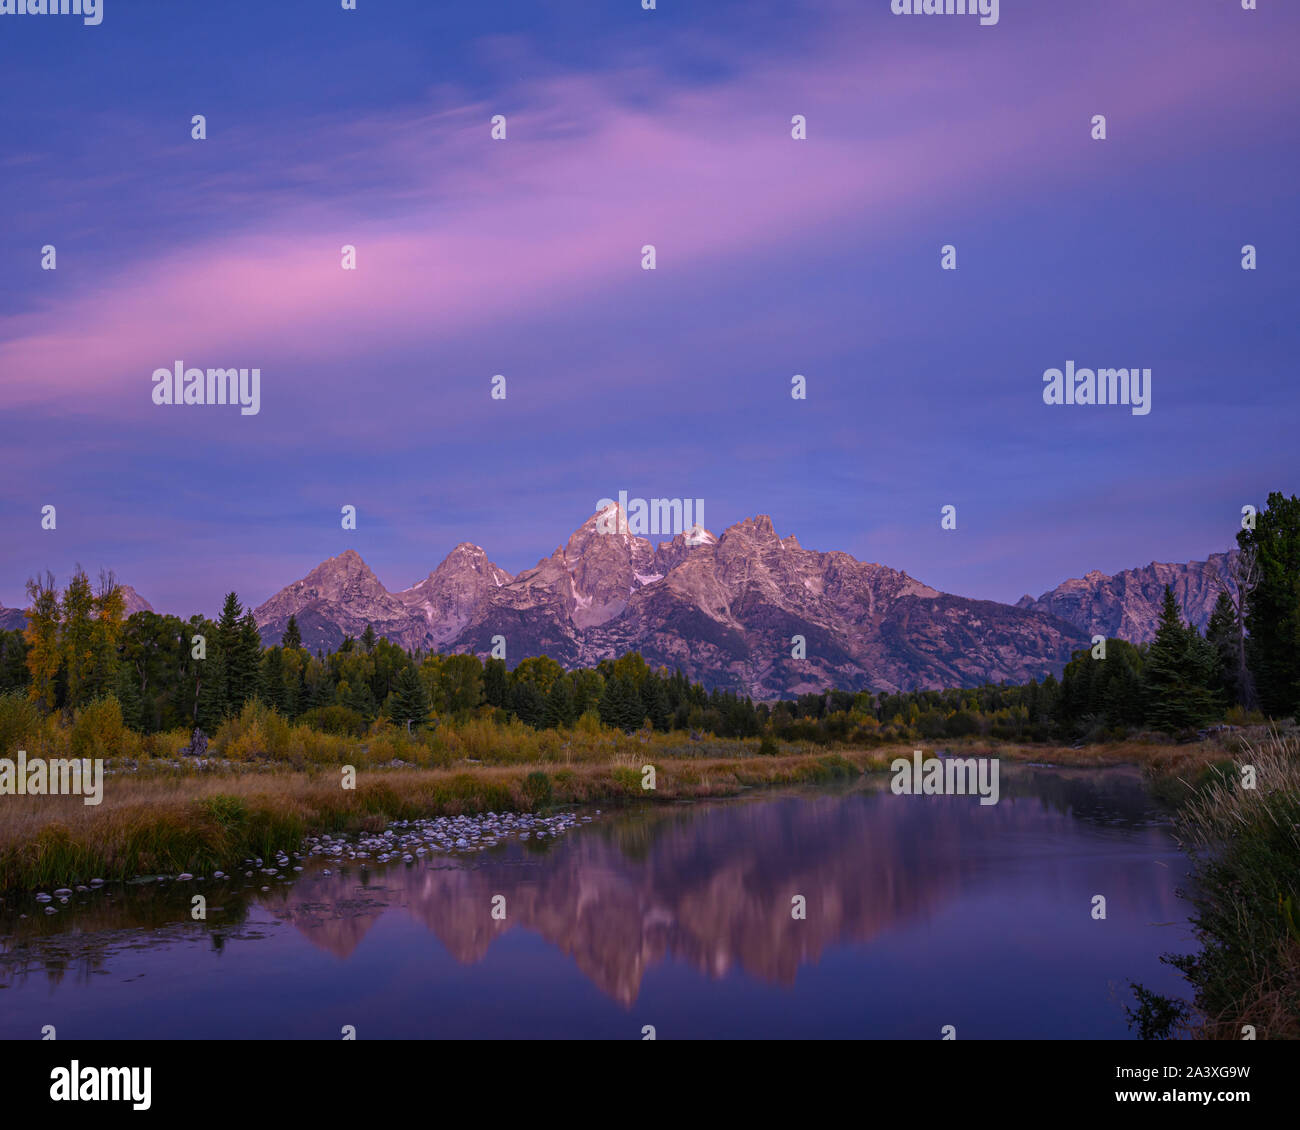 The Teton Mountains at dawn from Lower Schwabacher Landing in Grand Teton National Park, Wyoming, USA. Stock Photo